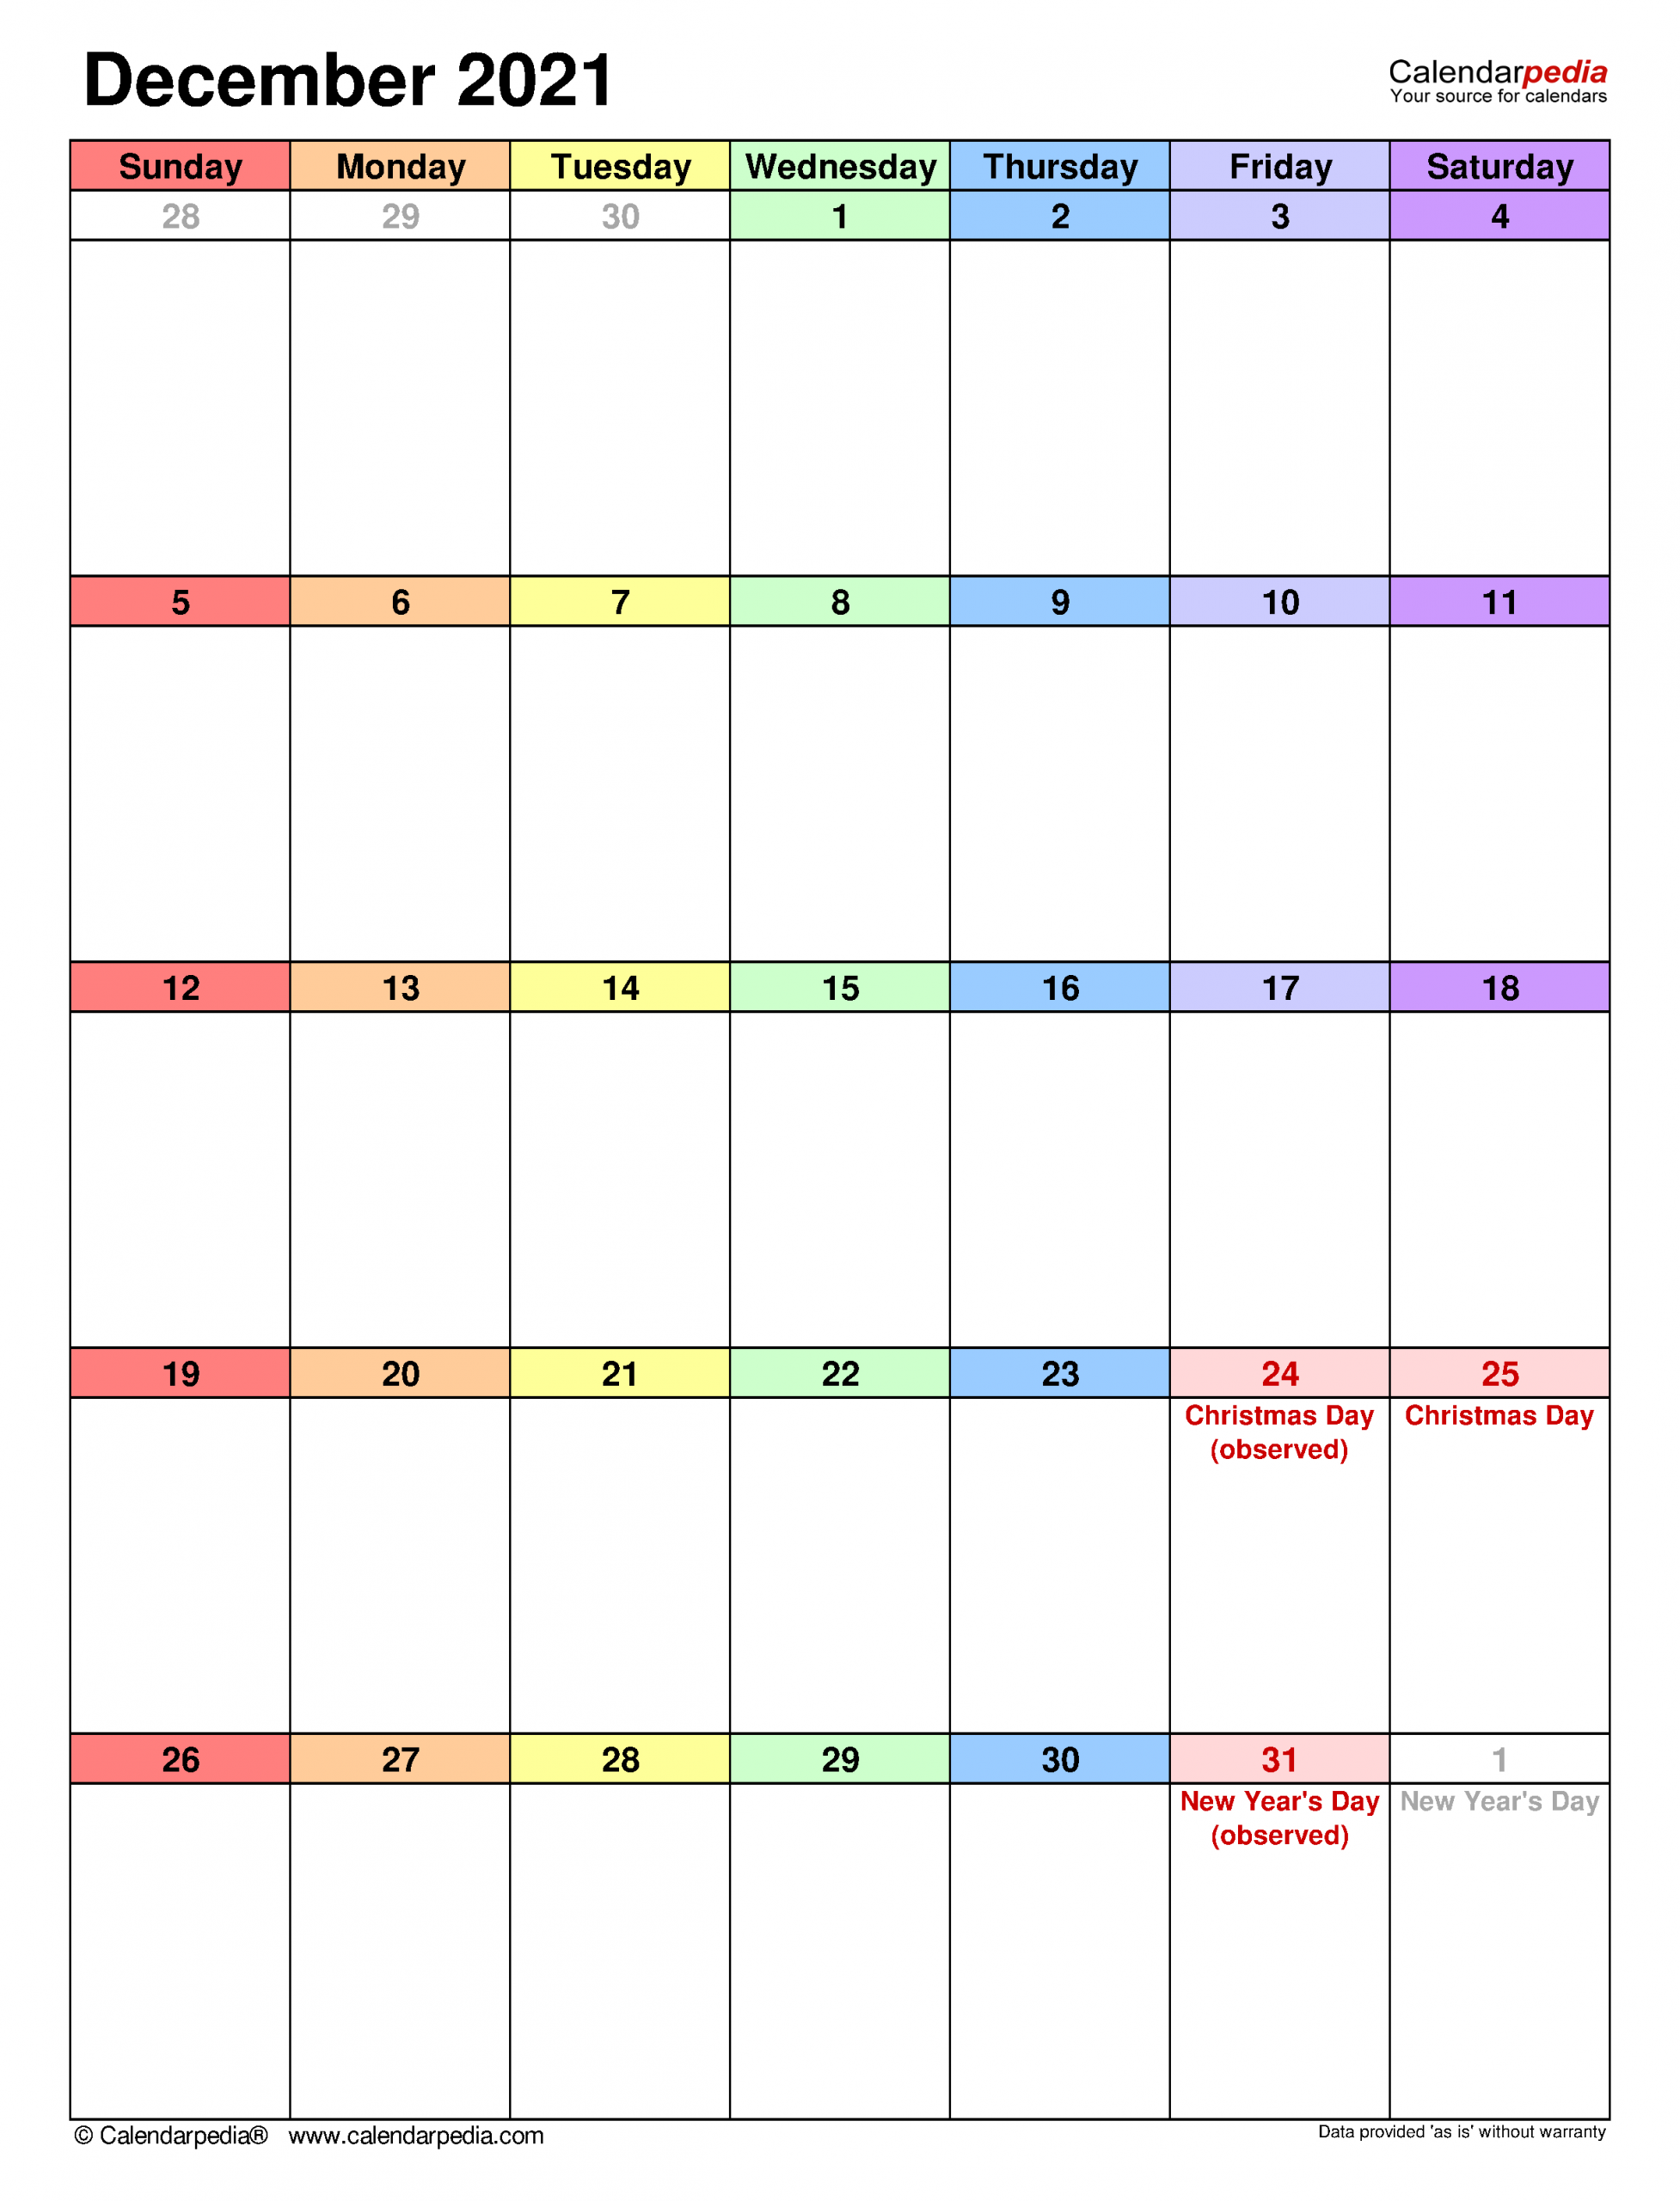 December 2021 Calendar | Templates For Word, Excel And Pdf December 2021 Blank Calendar